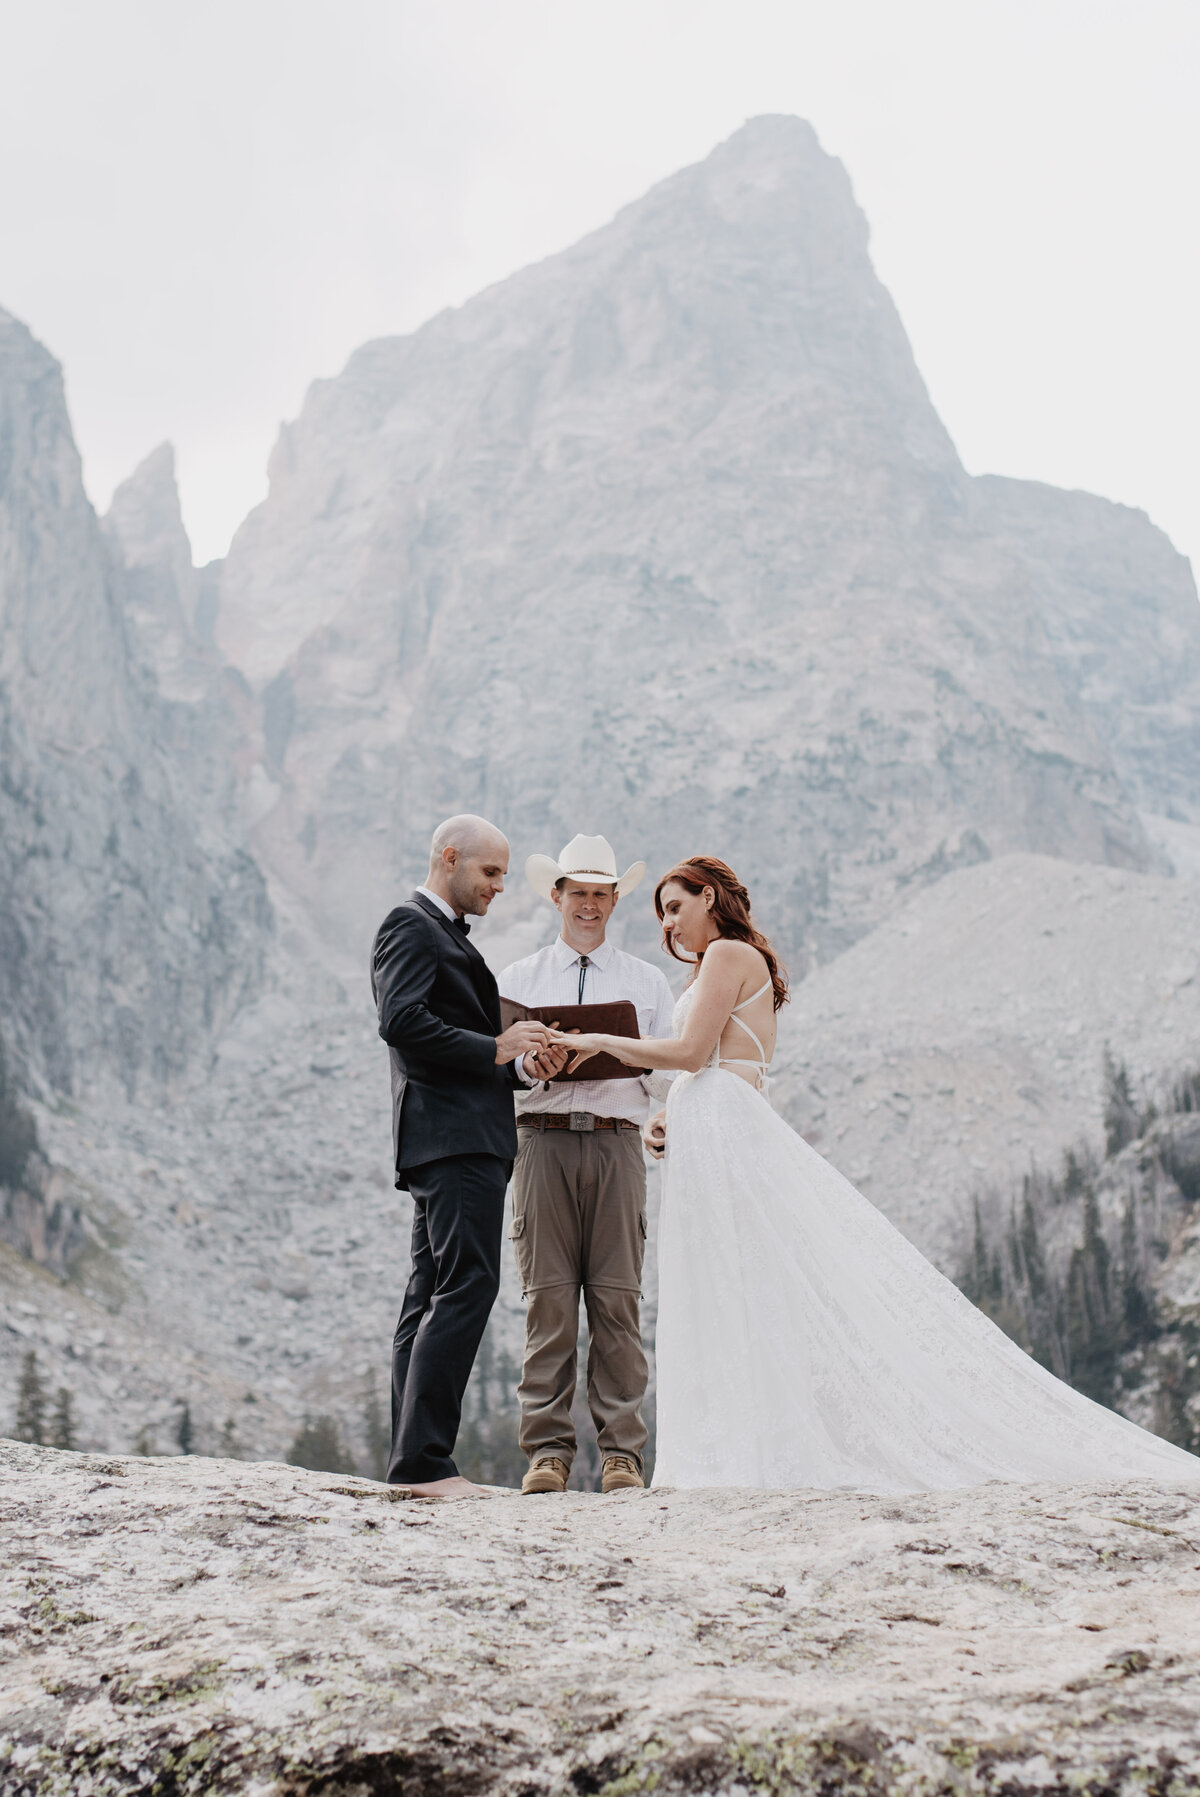 Jackson Hole photographers capture bride and groom praying together